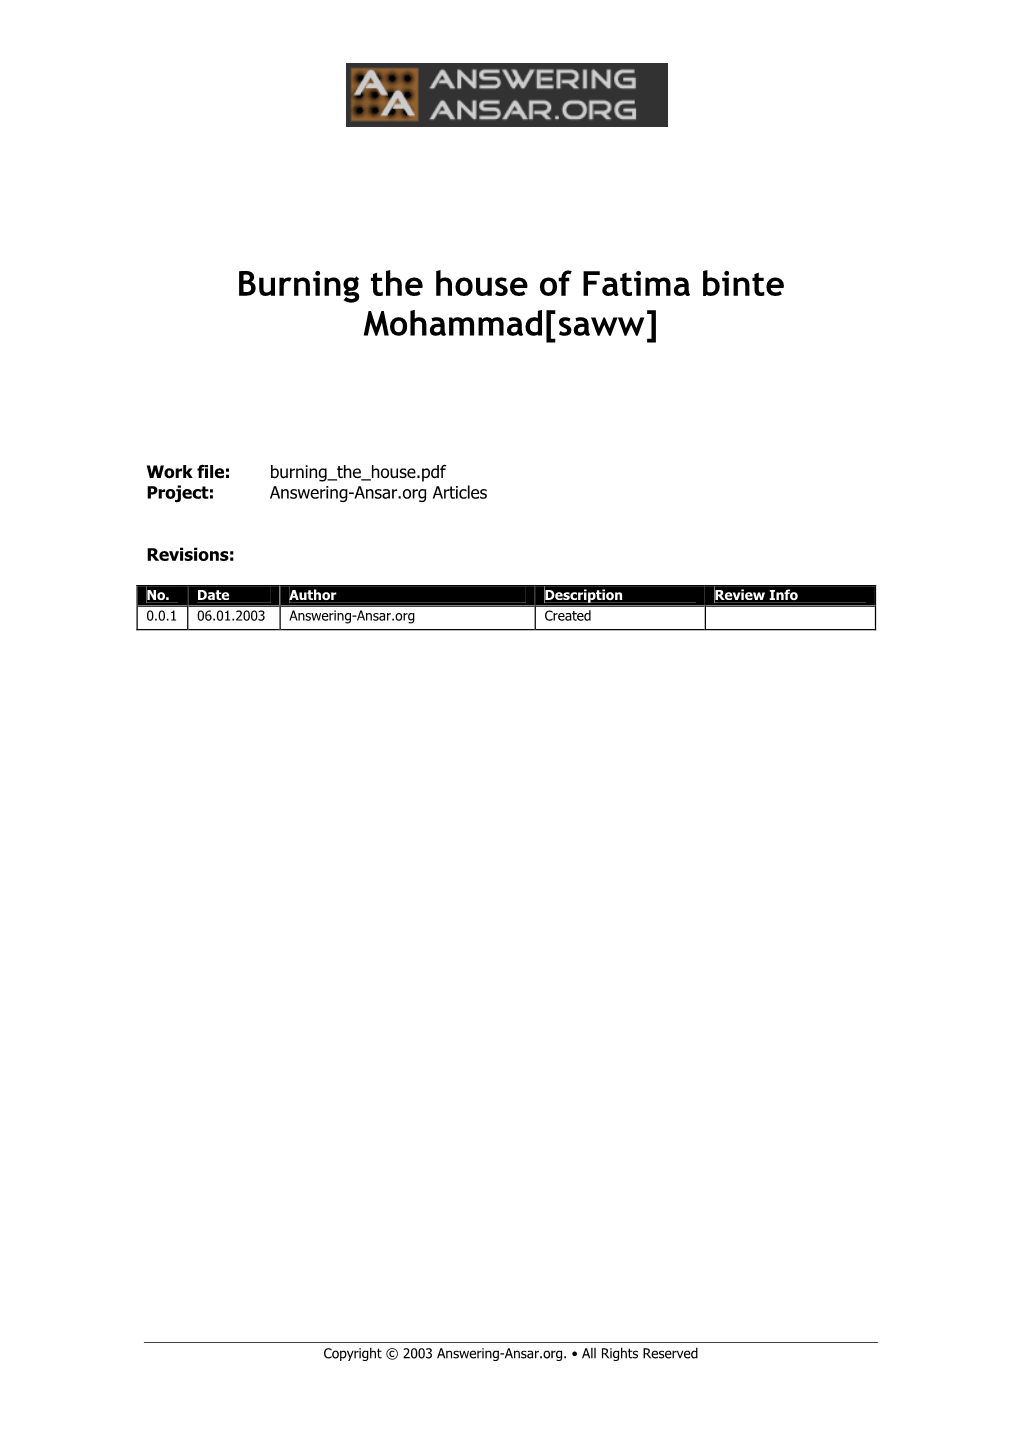 Burning the House of Fatima Binte Mohammad[Saww]